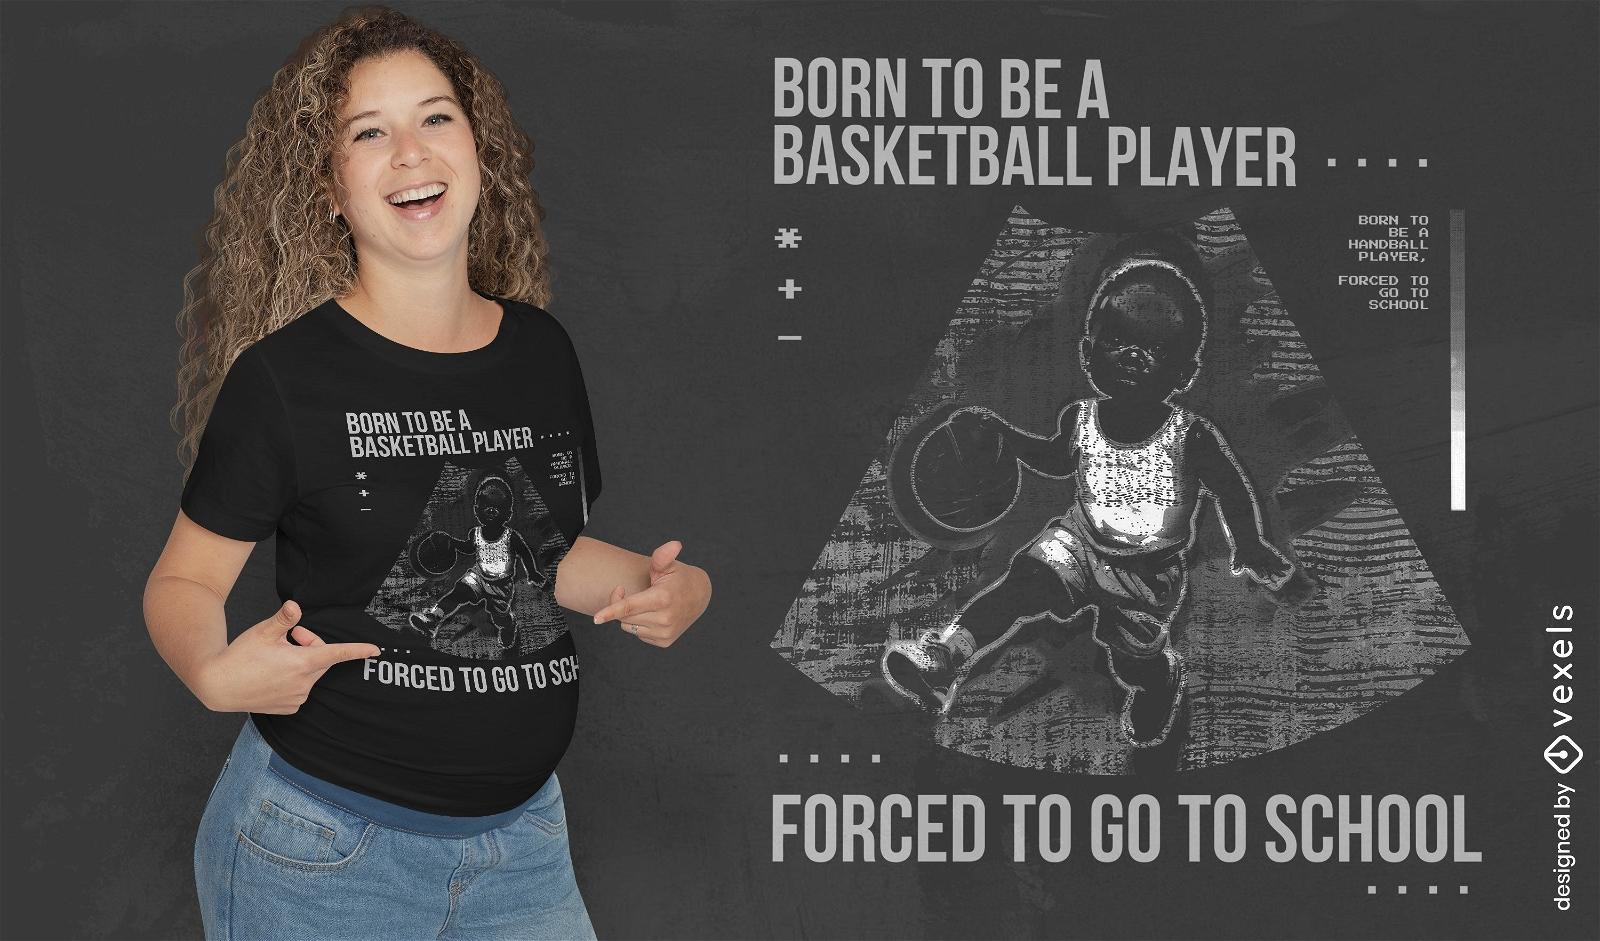 Dise?o de camiseta con cita de jugador de baloncesto beb?.